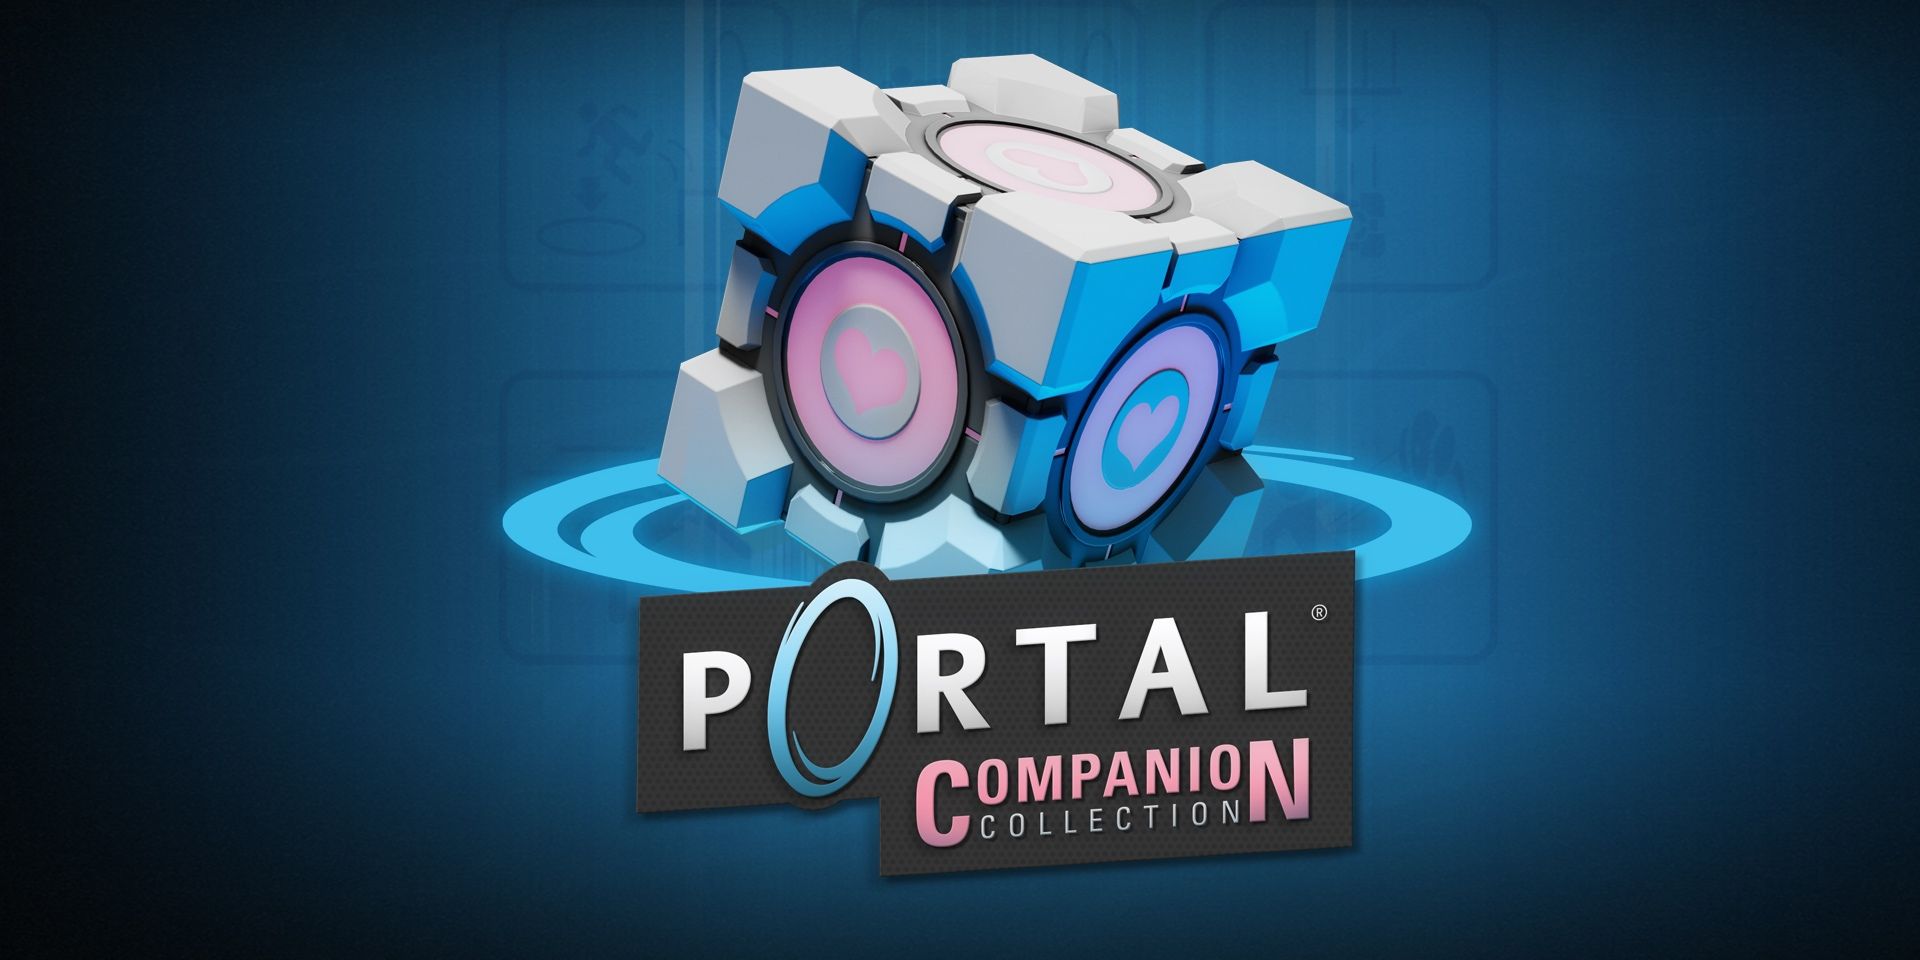 Portal Companion Collection title image.